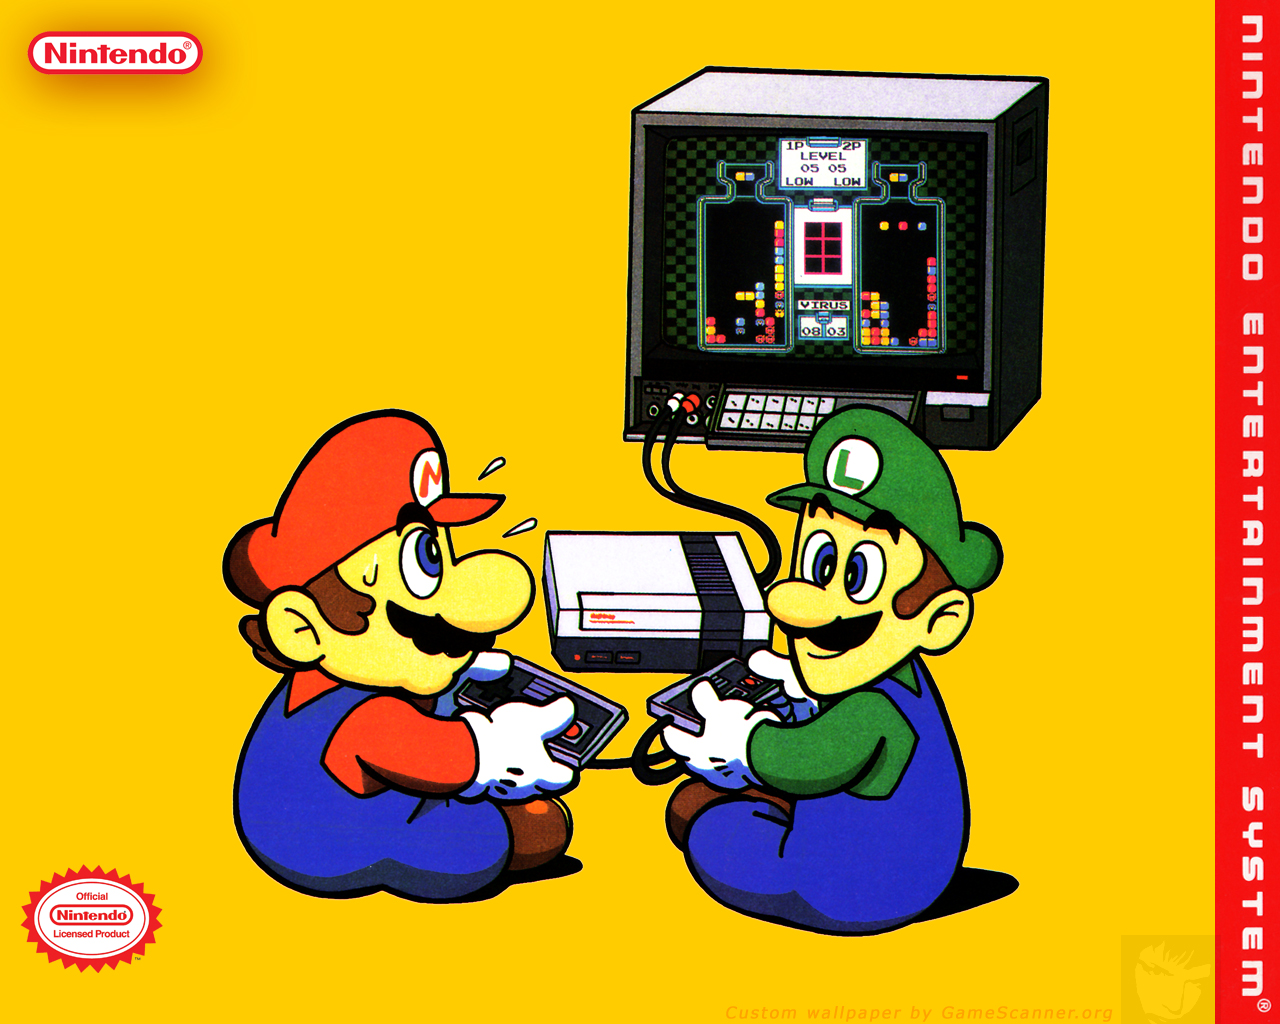 Mario & Luigi playing Dr. Mario